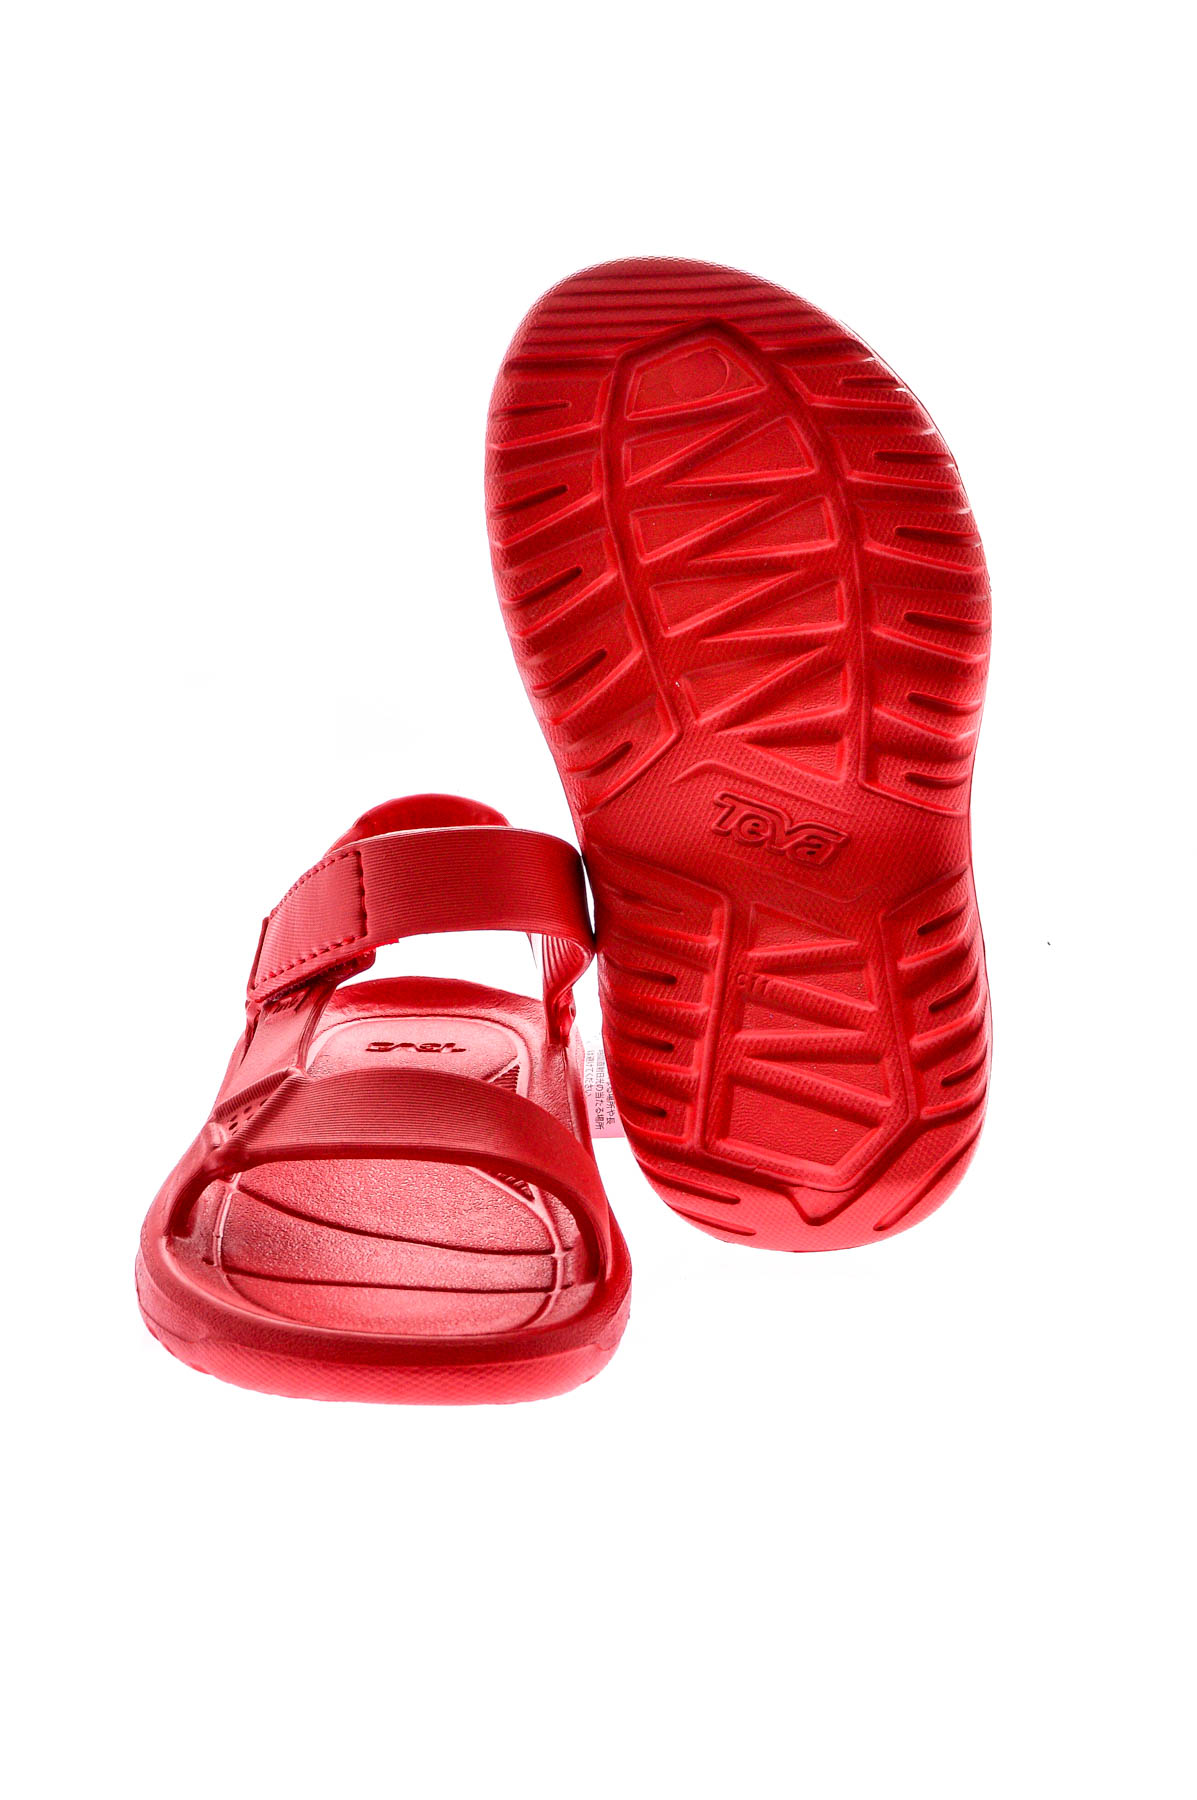 Kids' sandals - Teva - 3